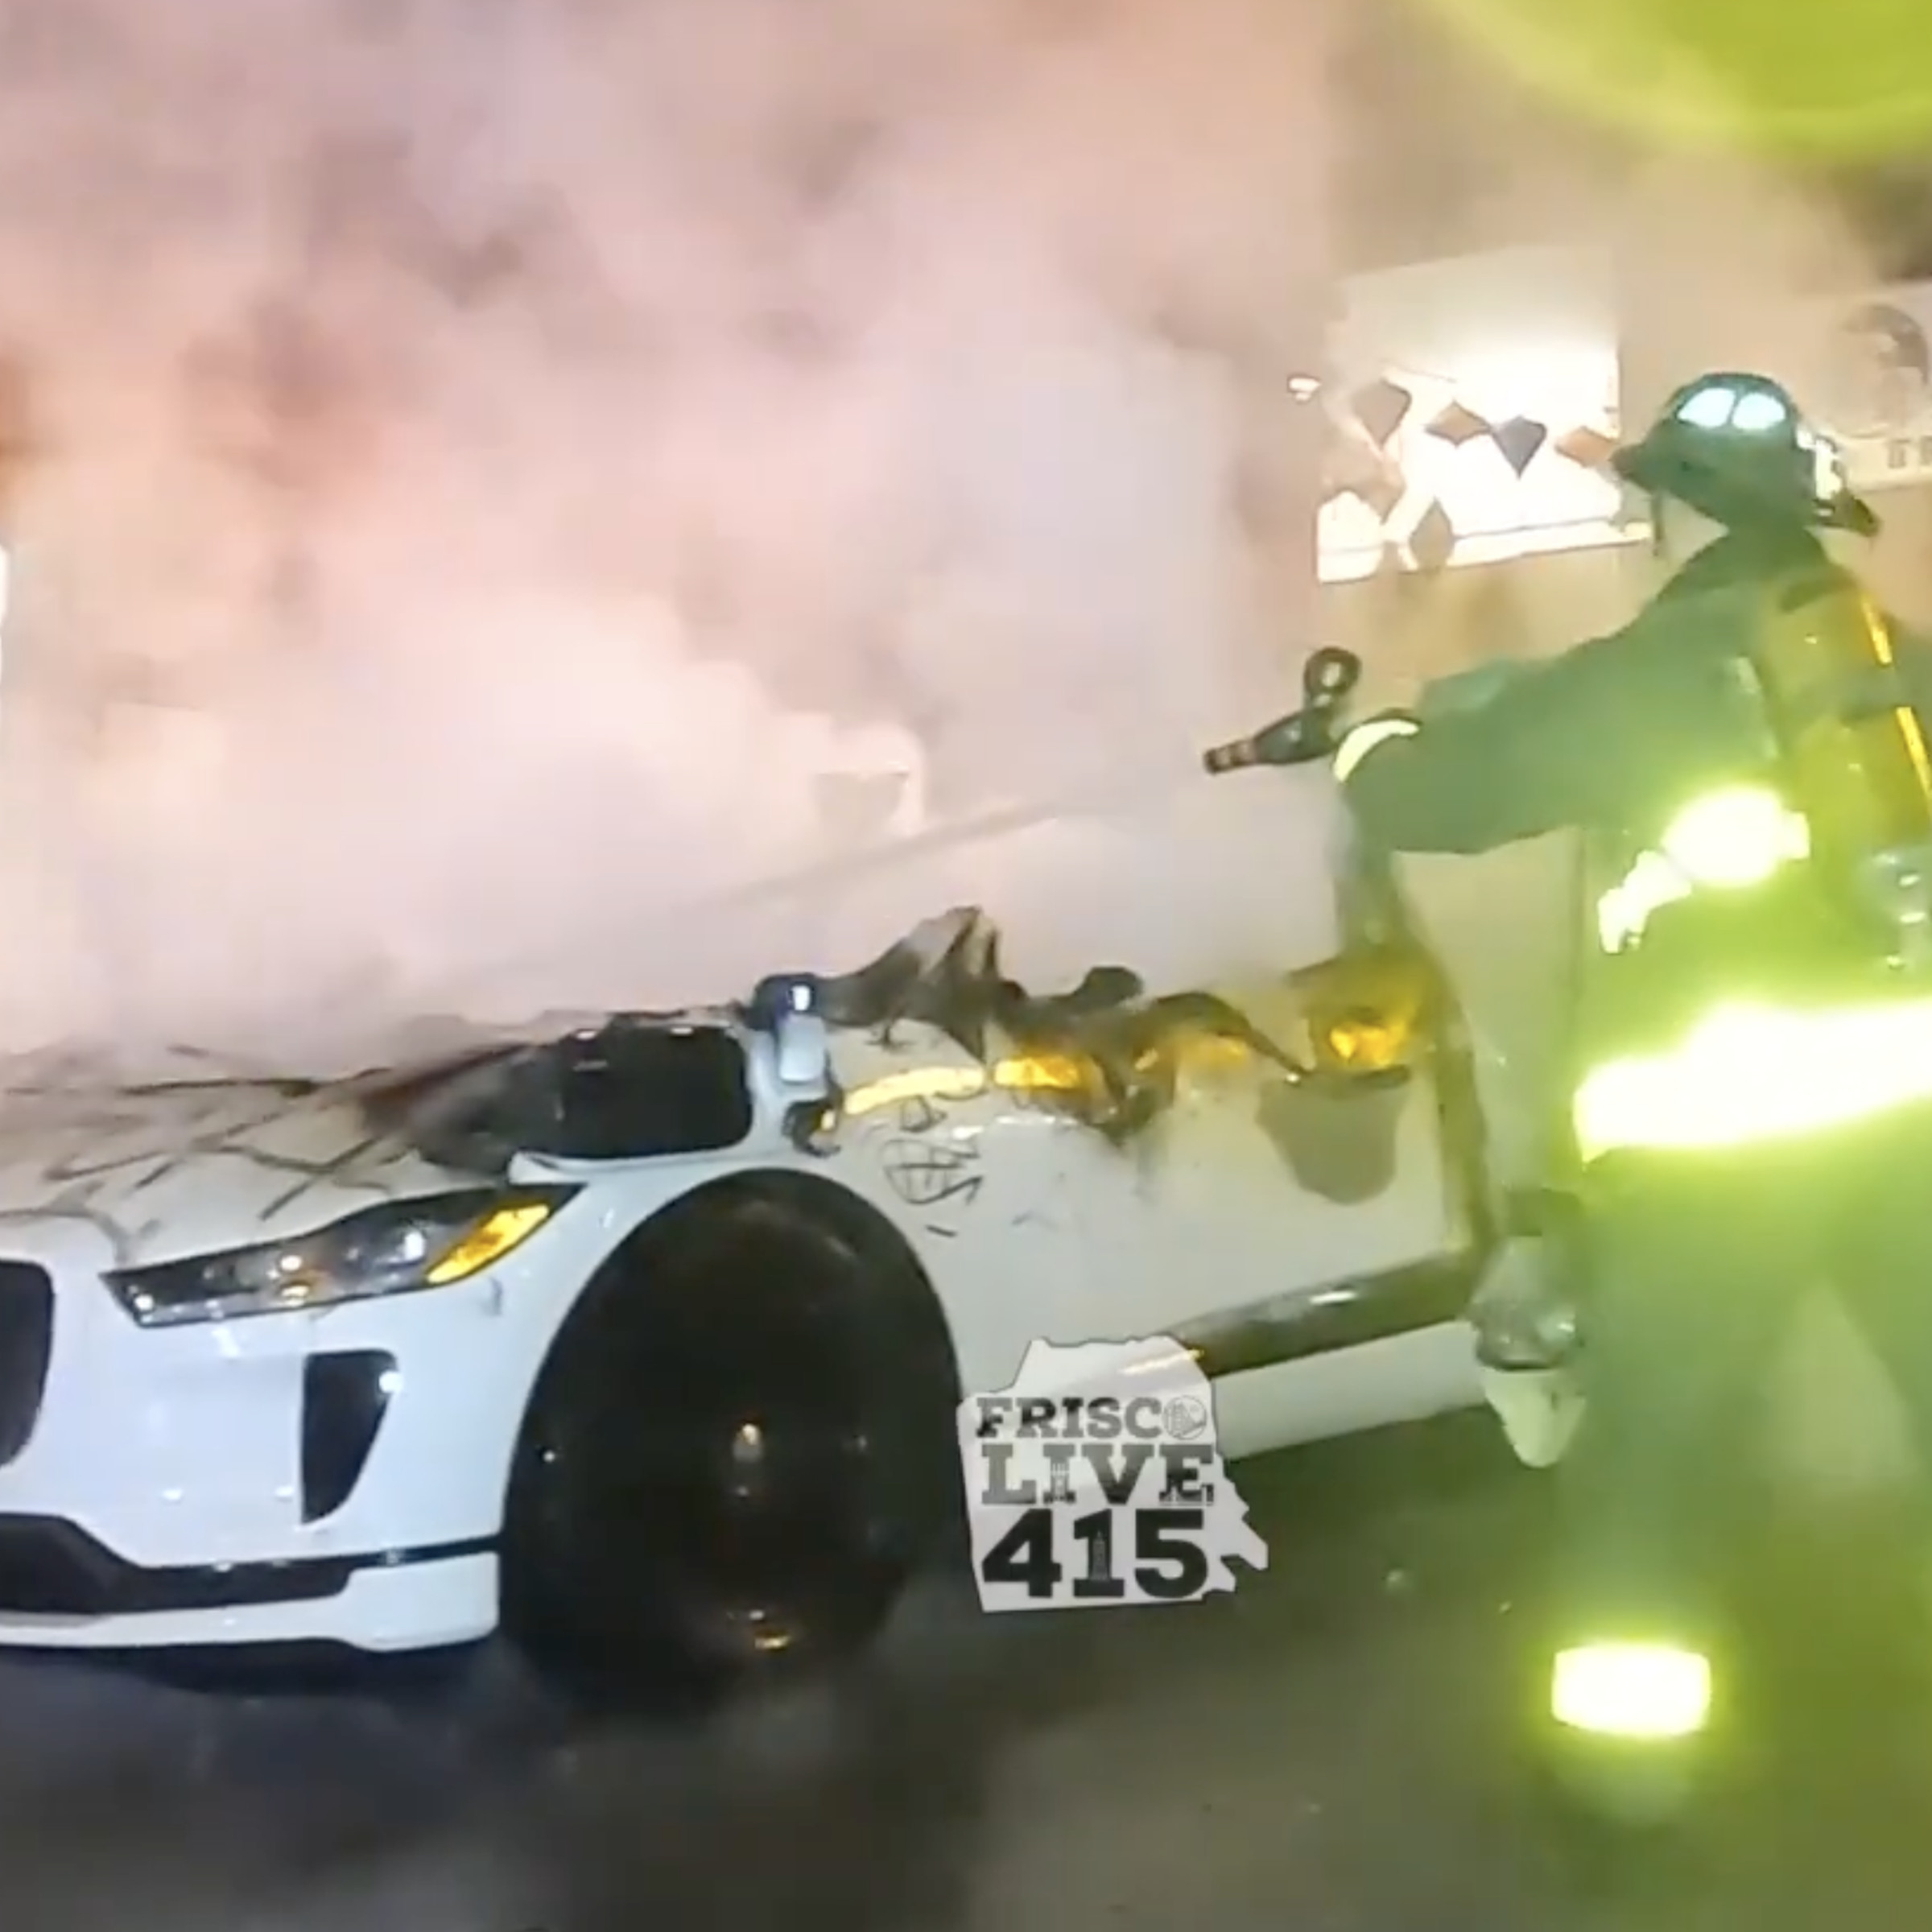 Firefighters spraying a Waymo car.